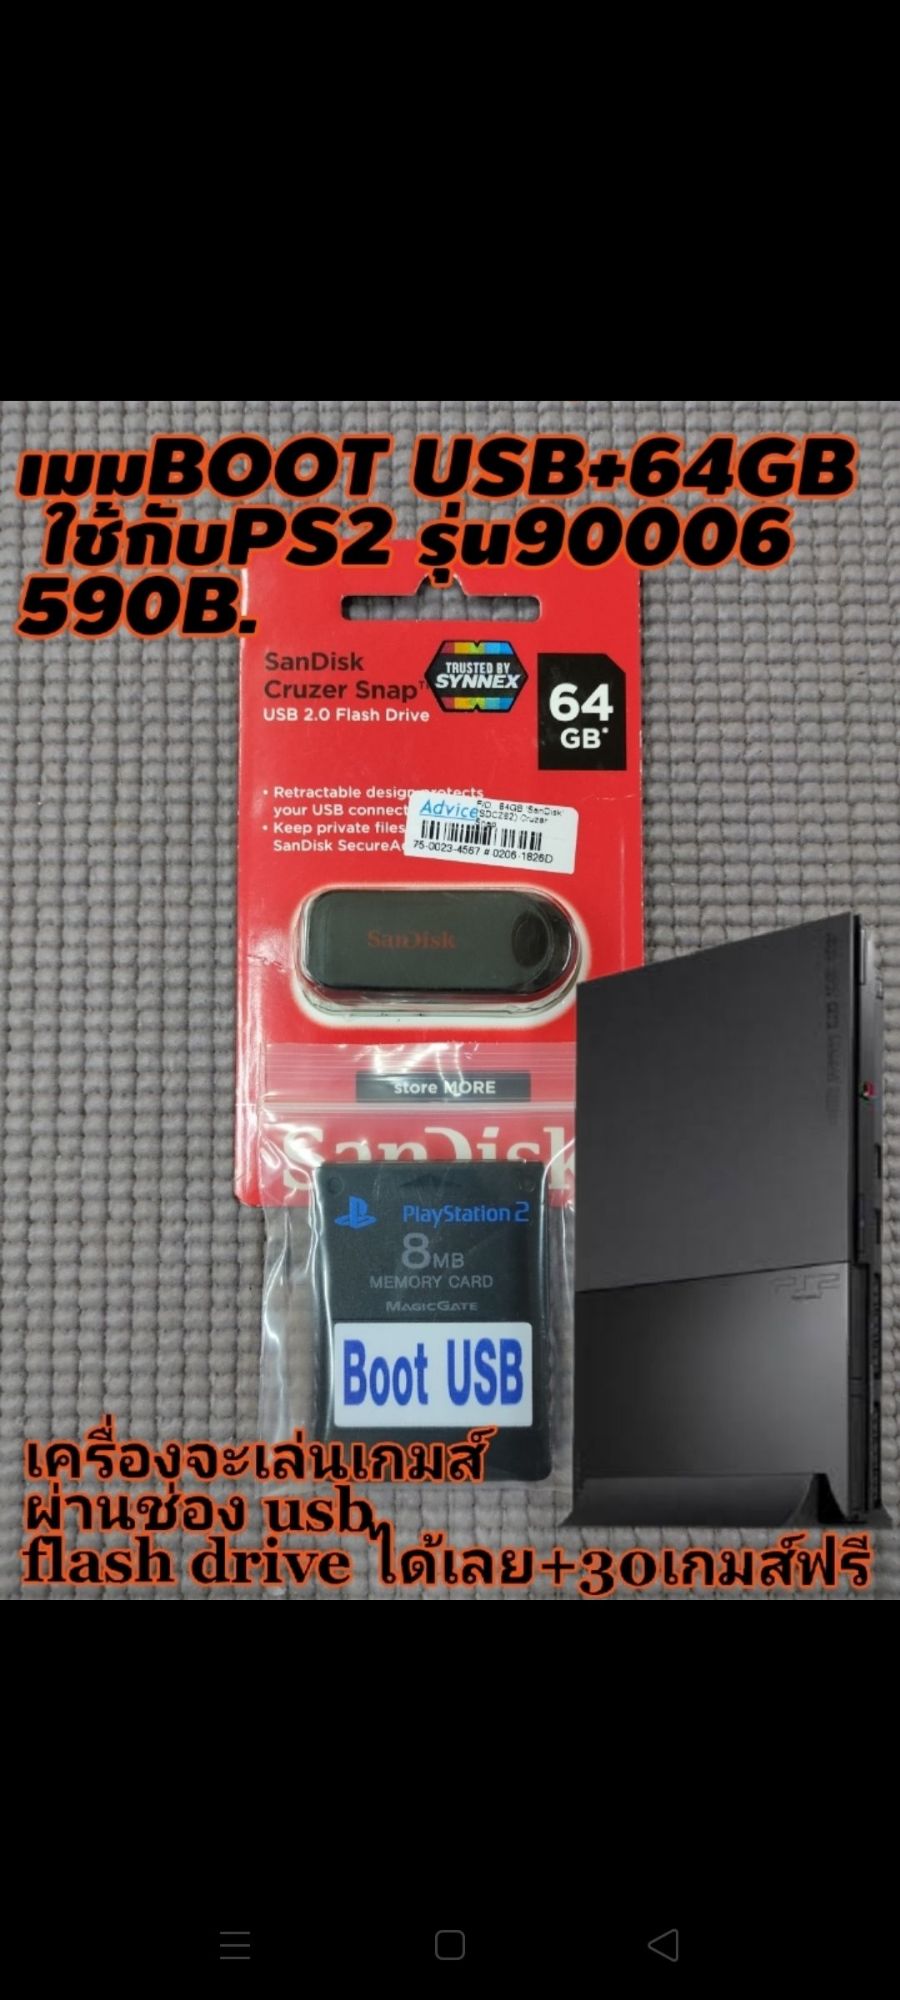 PS2 90006 เมมBOOT USBสำหรับPS2 SONY รุ่น90006 สามารถเล่นเกมส์ผ่านช่องUSB ได้เลย